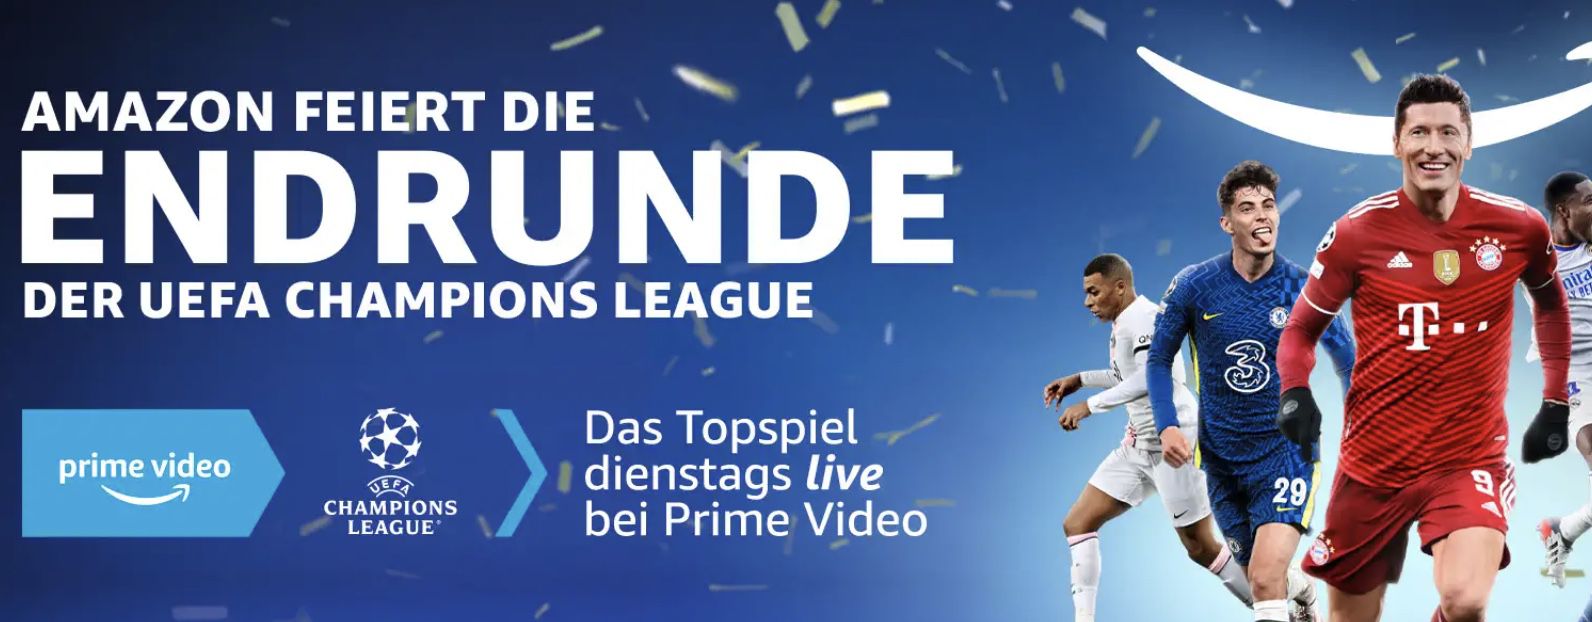 Amazon Prime: Bayern München vs. FC Salzburg im CL Achtelfinale